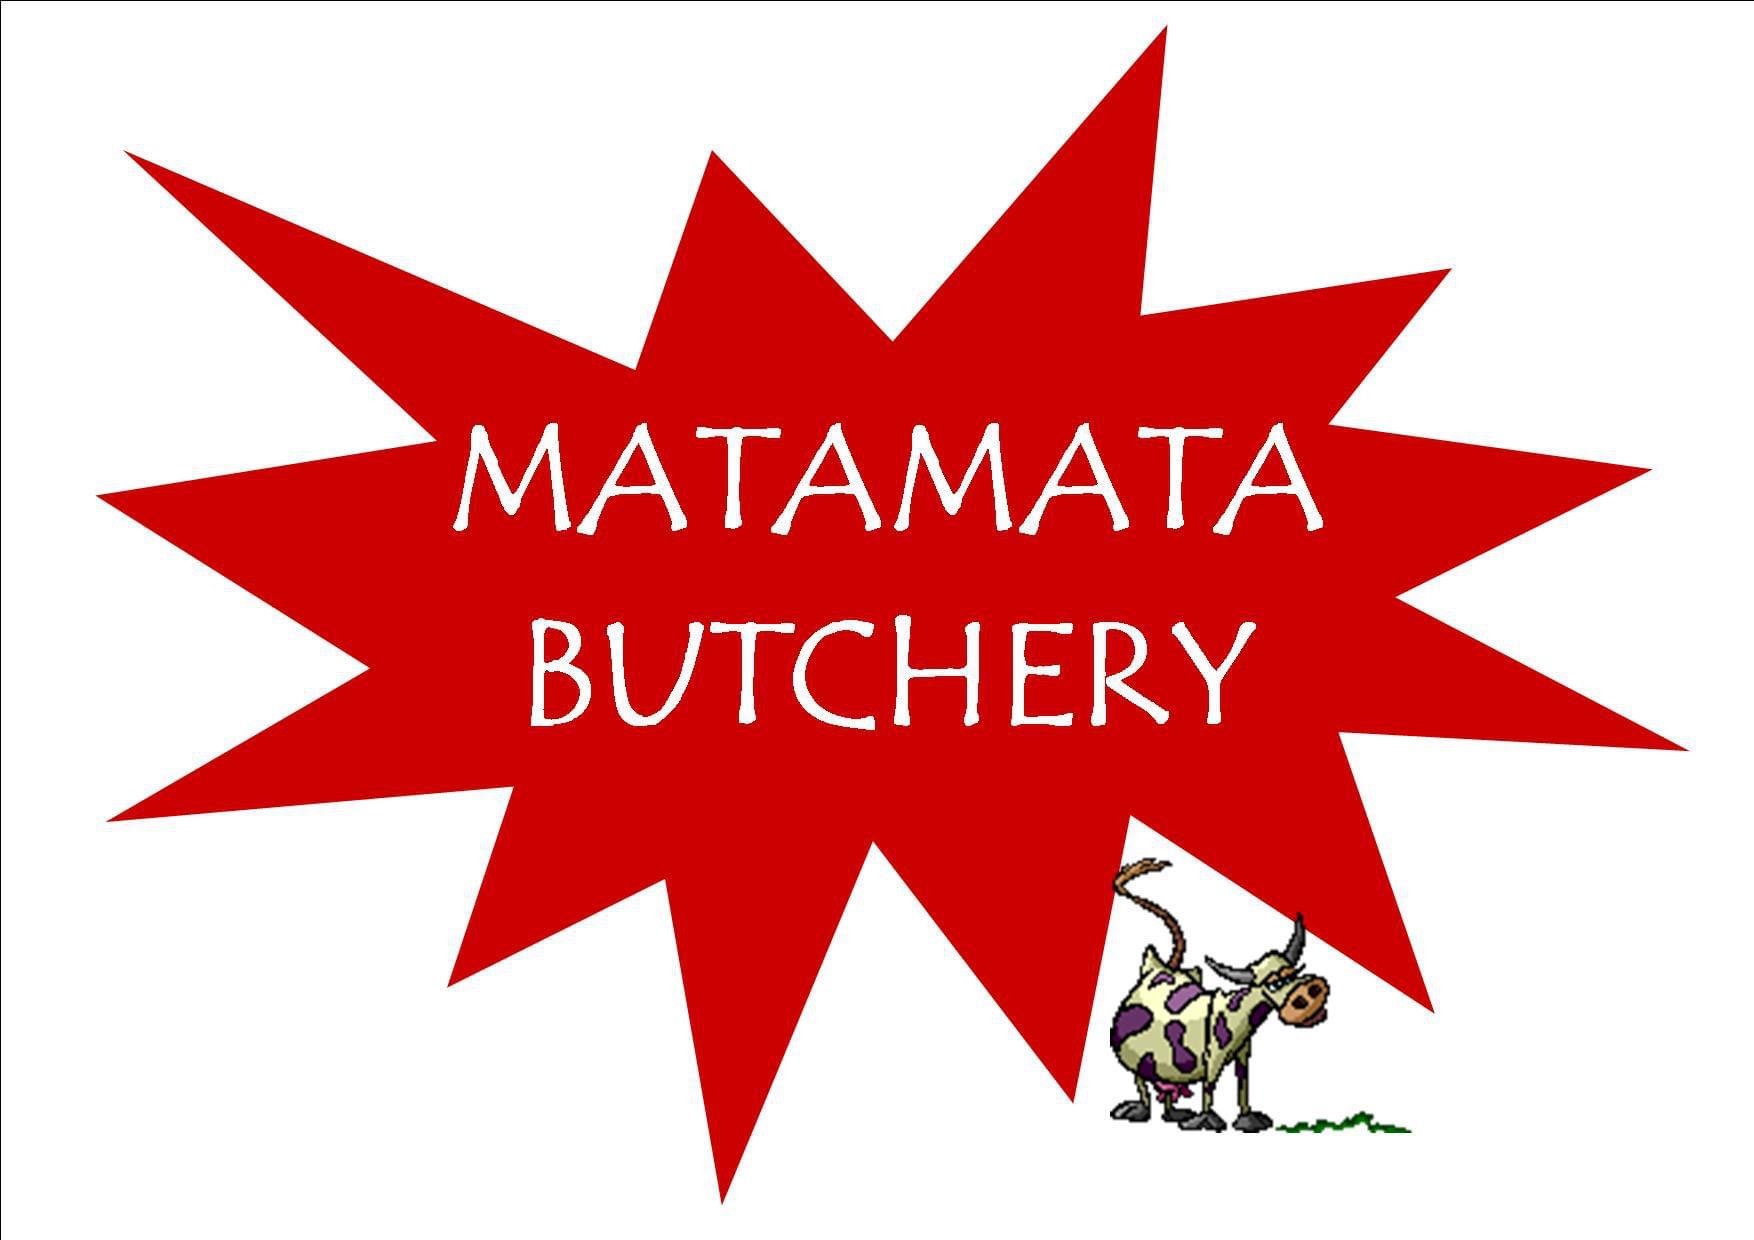 Matamata Butchery Limited